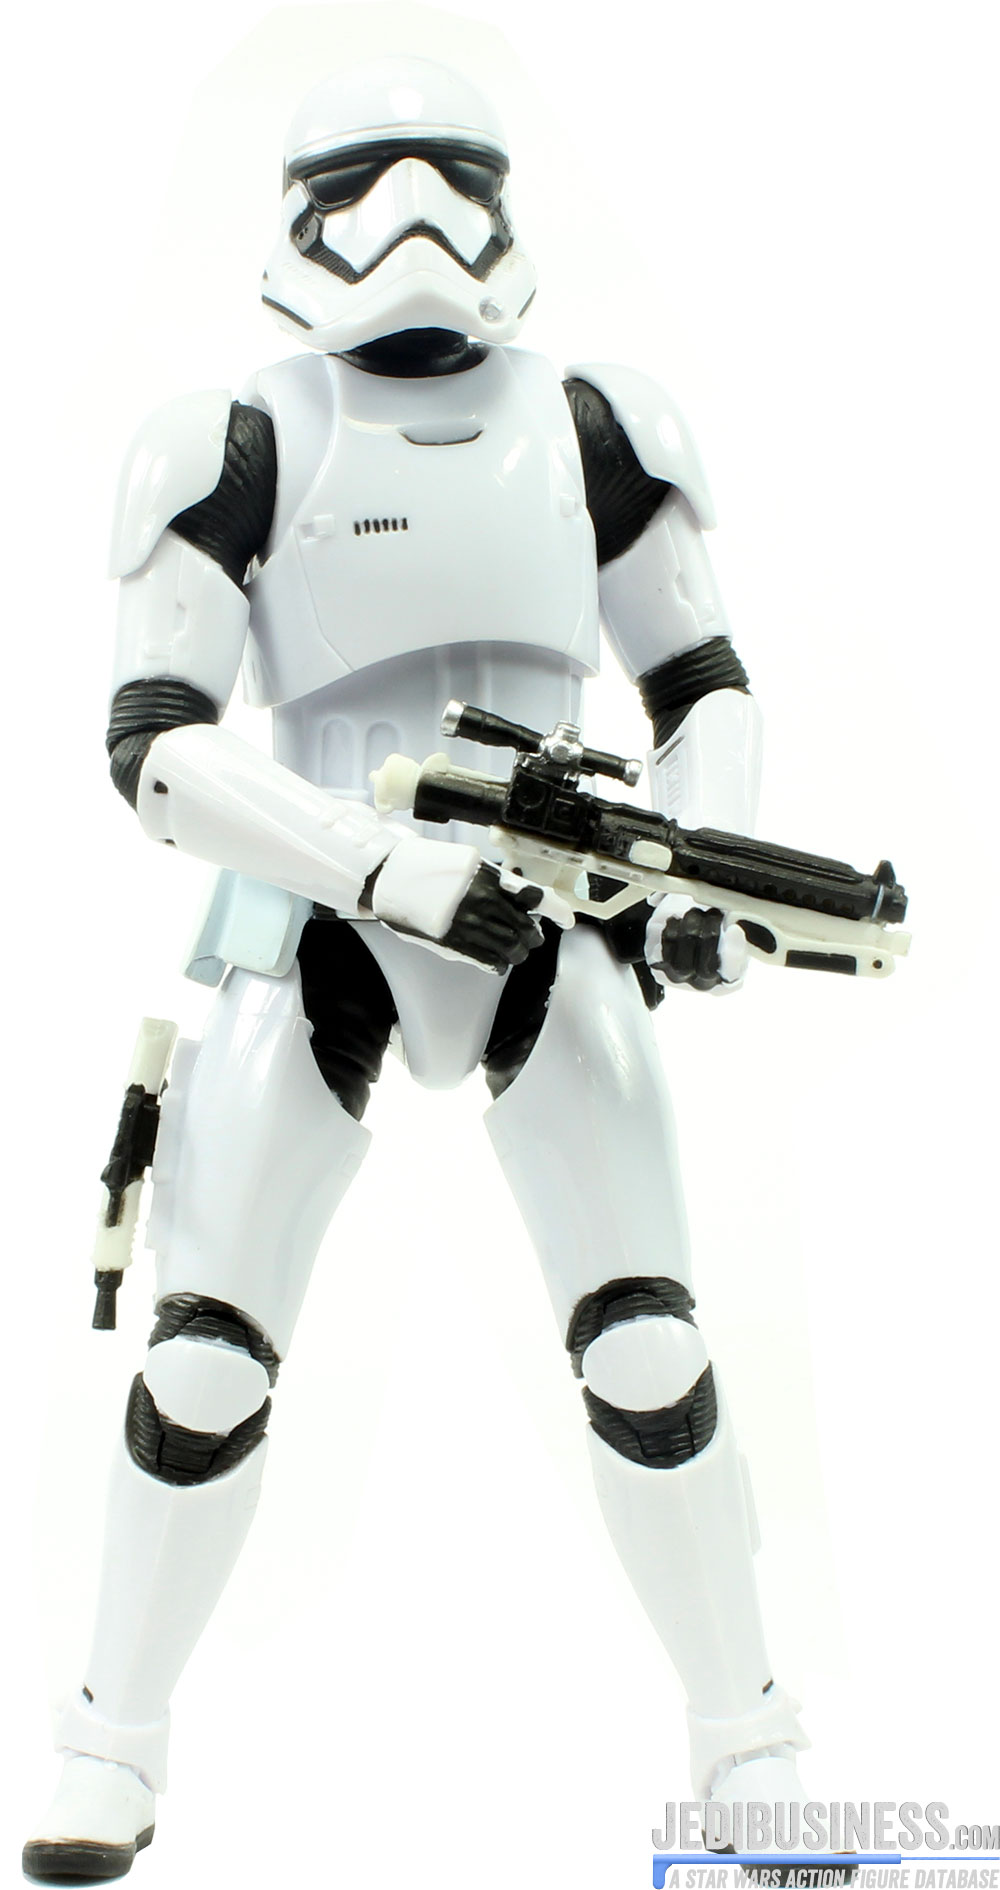 Stormtrooper First Order